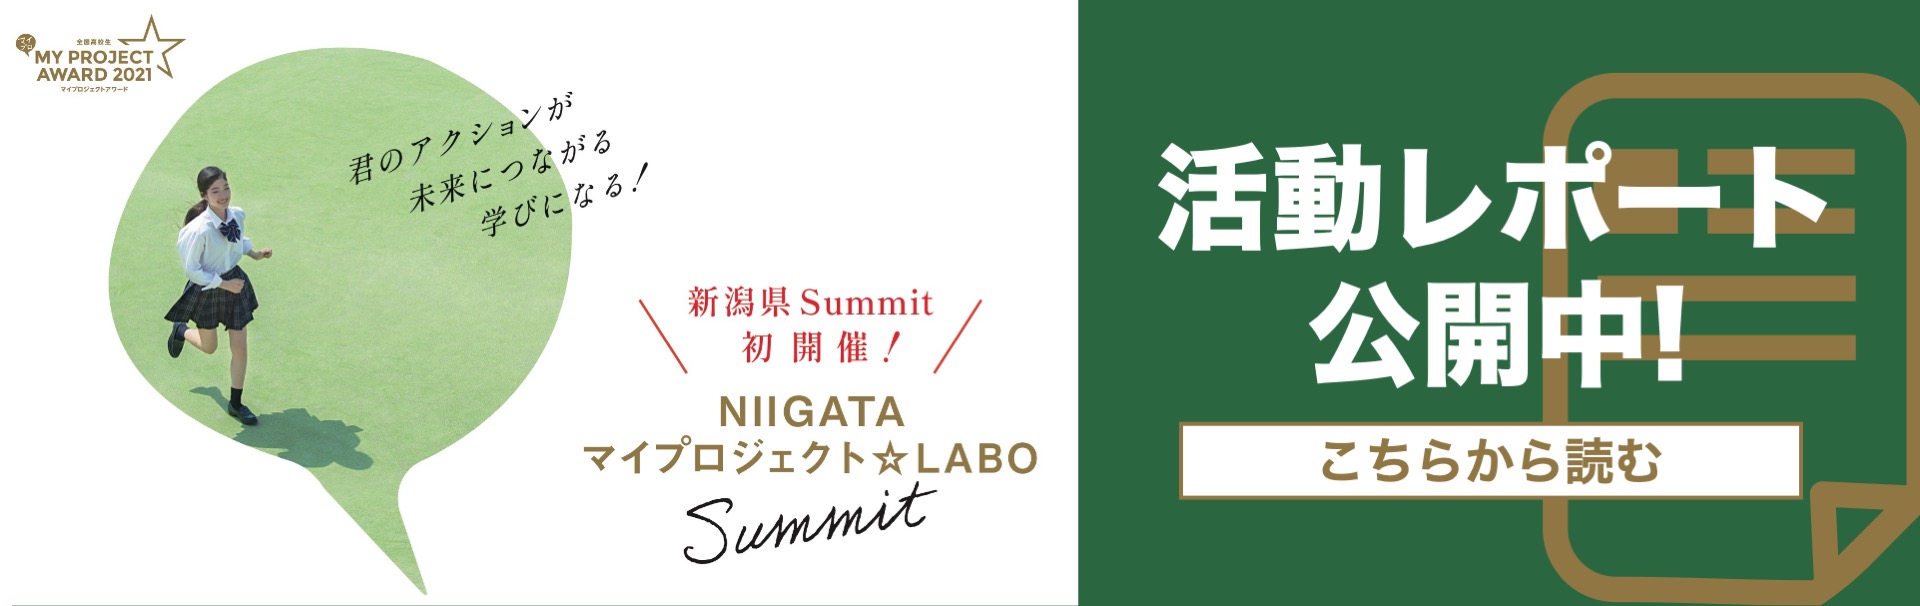 NIIGATAマイプロジェクト☆LABO 新潟県Summit活動レポート